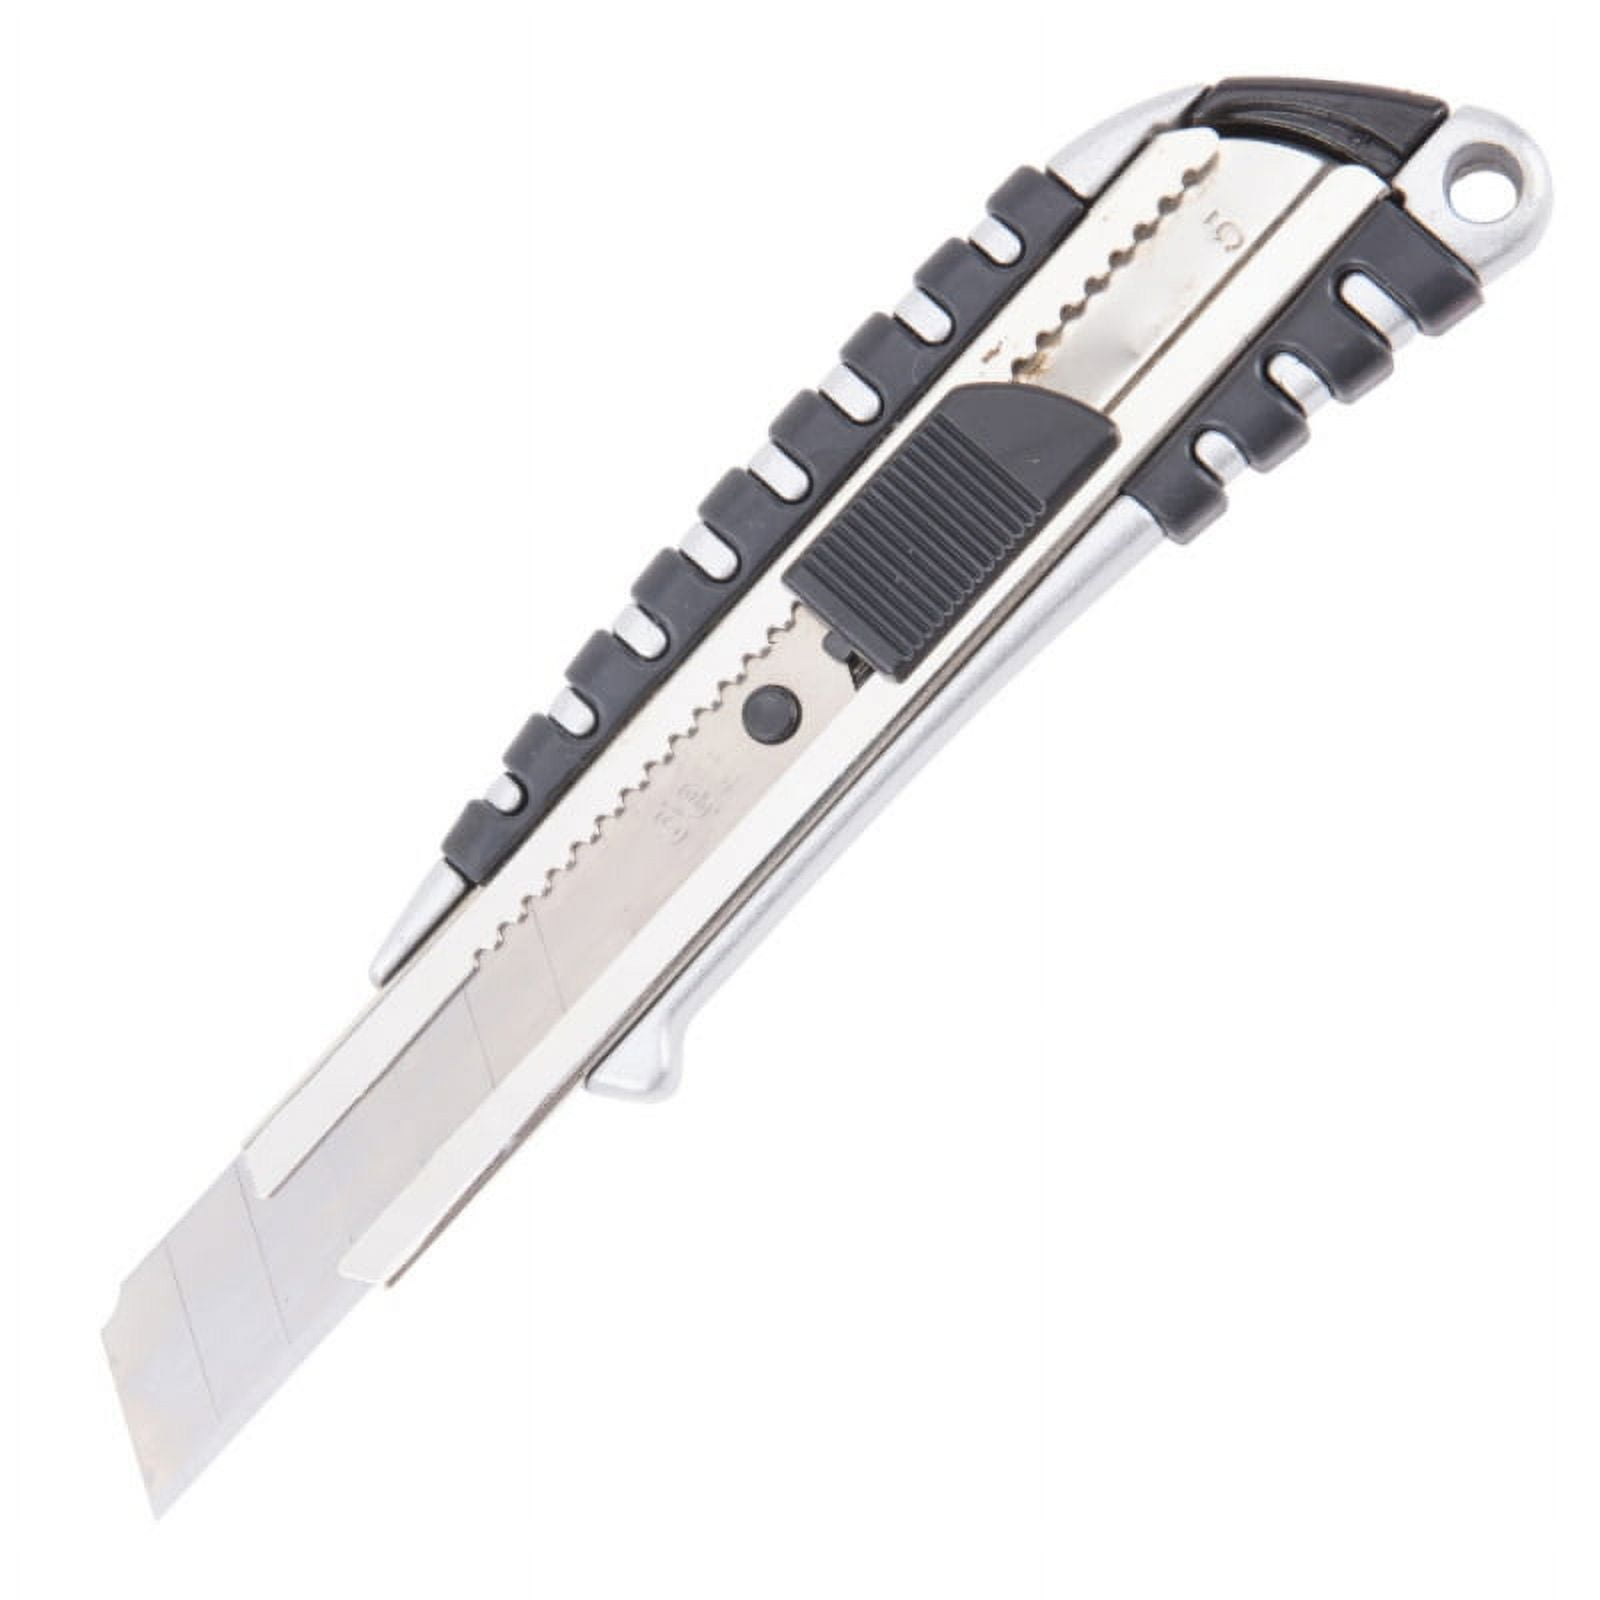 Magazine Aluminum Alloy Utility Knife Box Cutters Retractable with Non-Slip Handle Heavy Duty Design, Silver